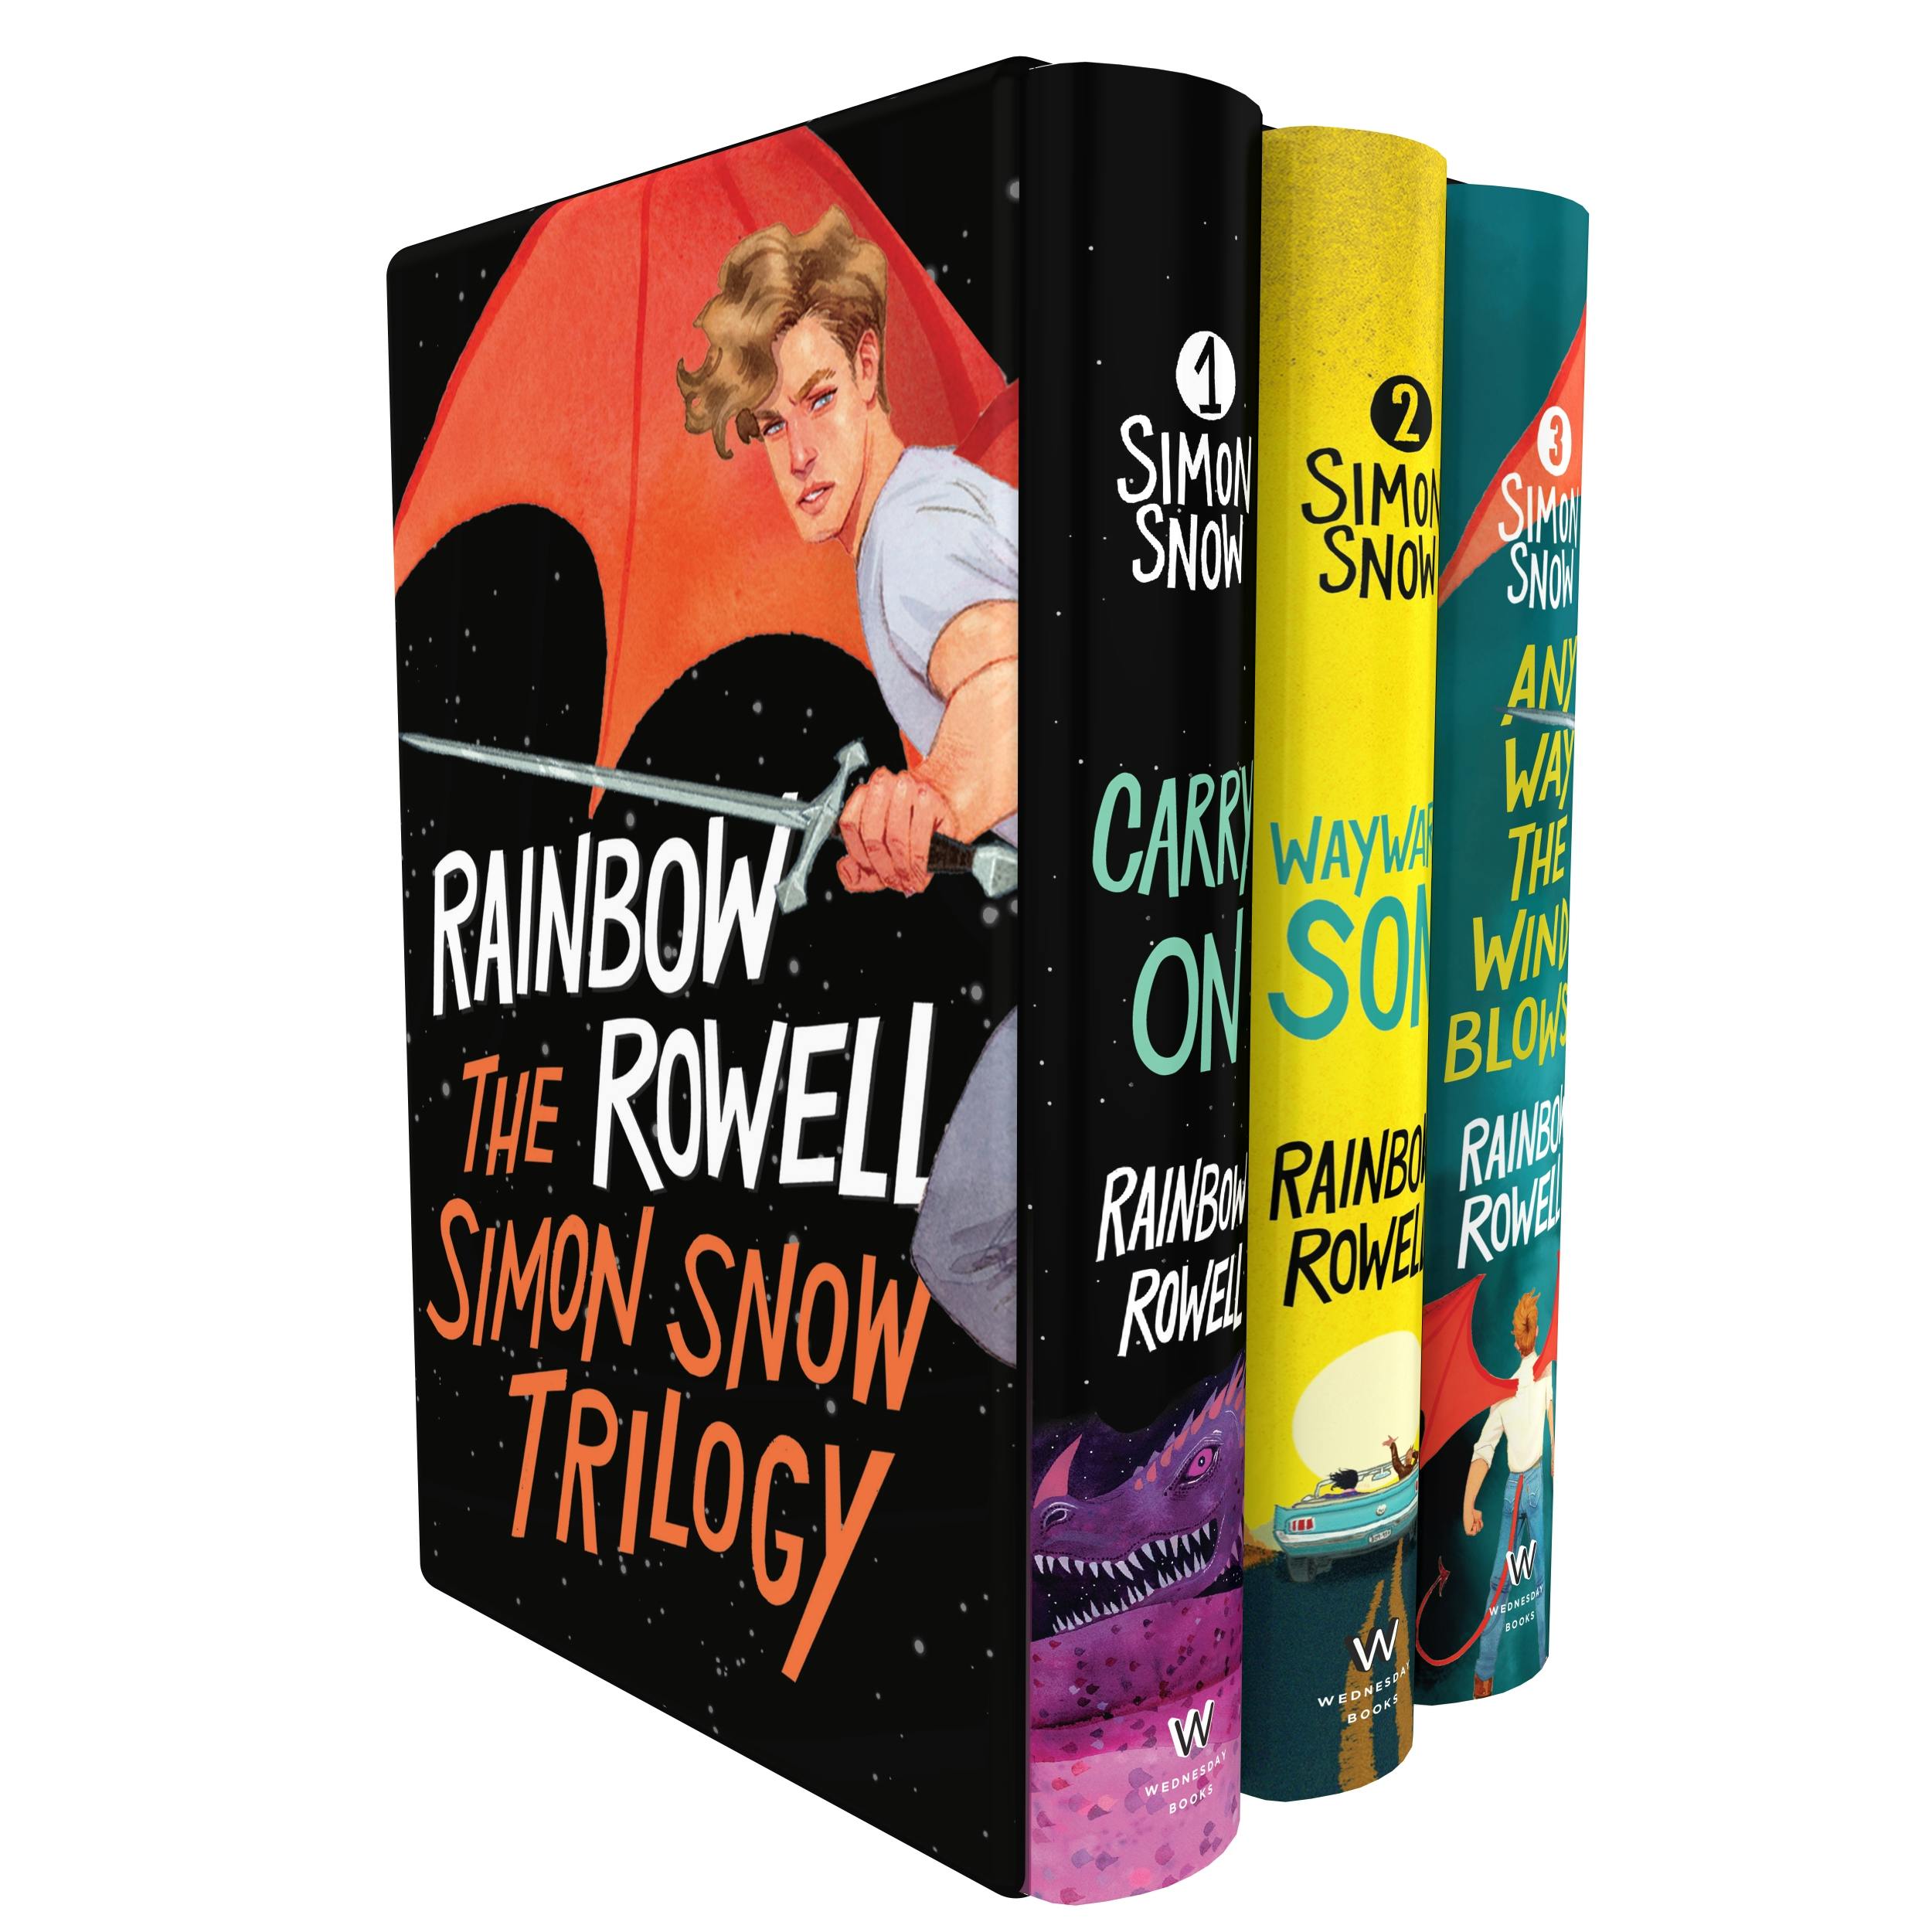 carry on rainbow rowell online